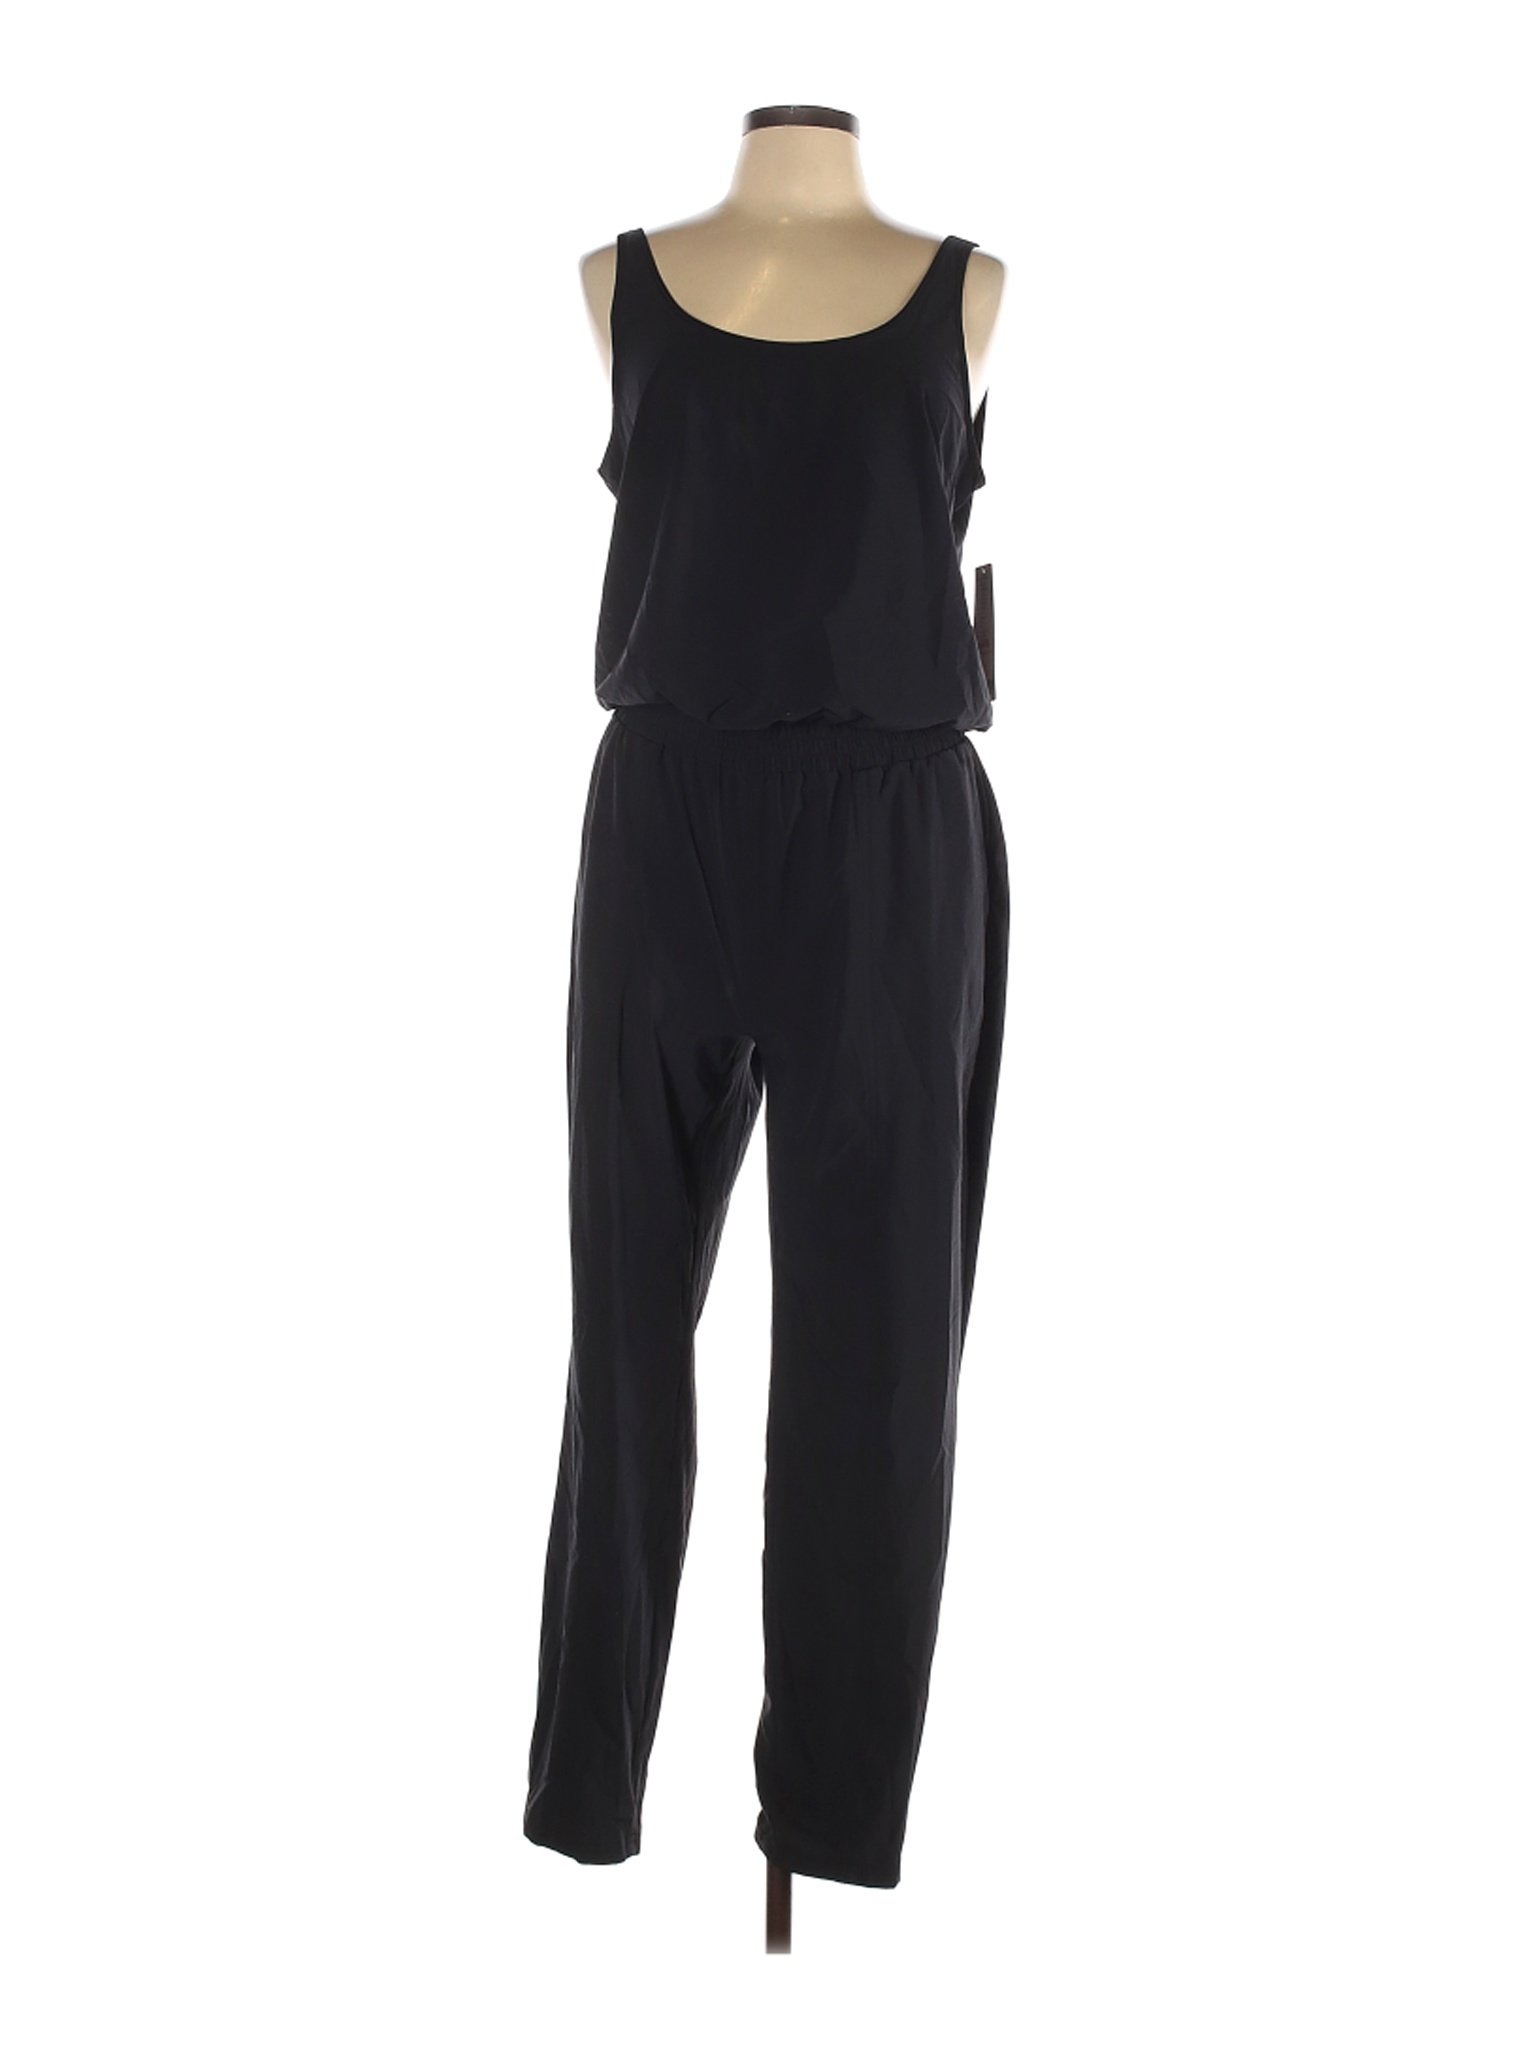 Athleta Solid Black Jumpsuit Size 12 - 40% off | thredUP